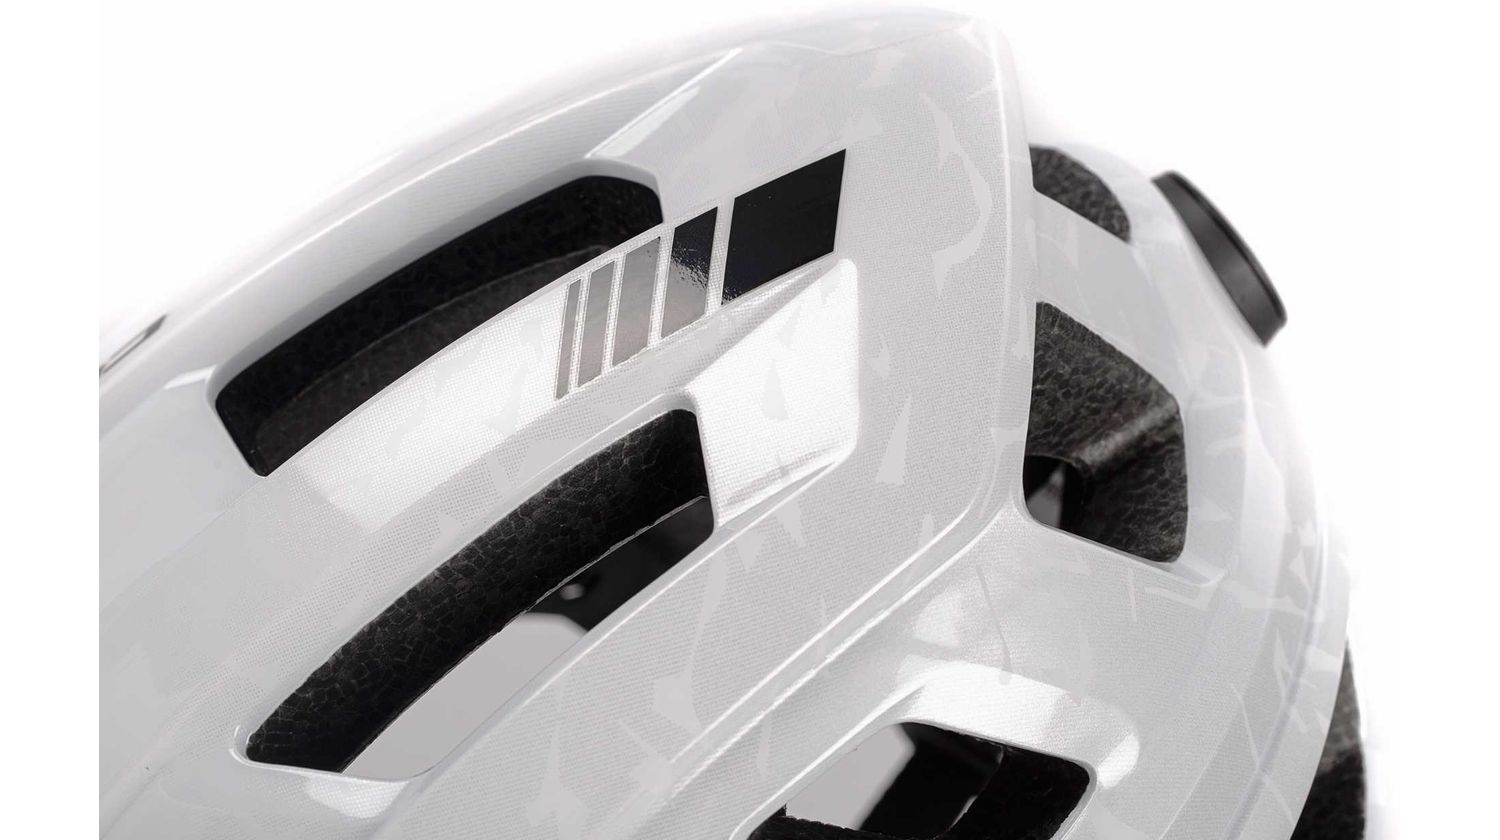 Cube Helm STEEP glossy white M/52-57 cm